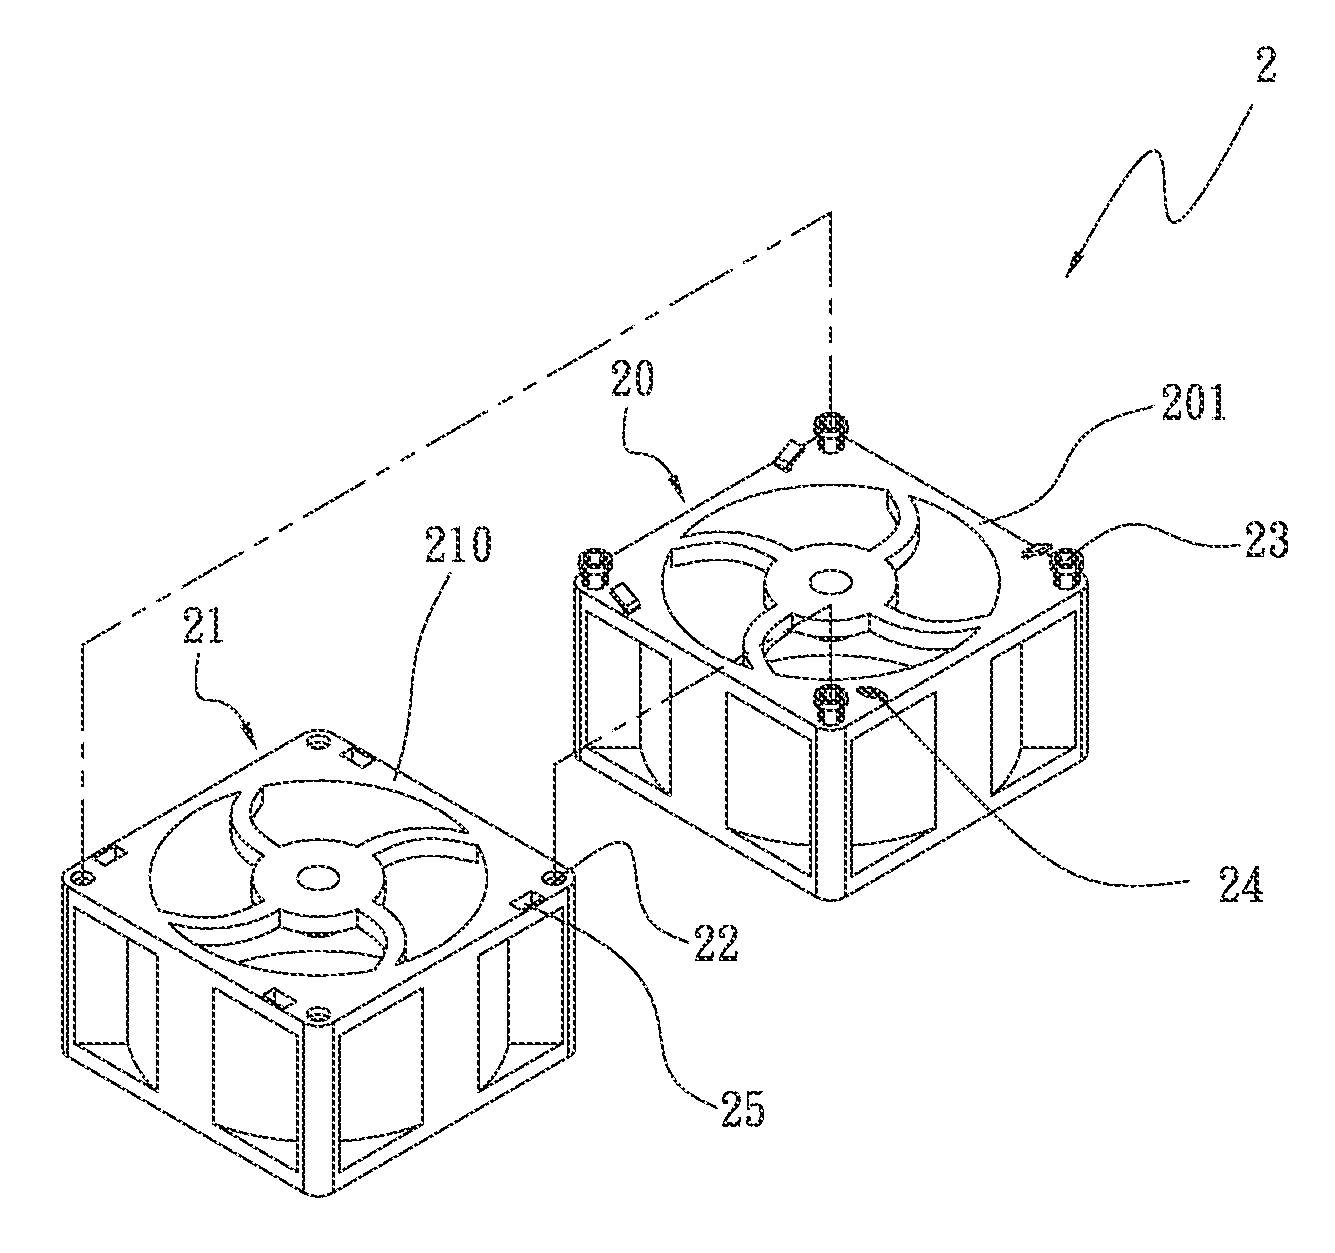 Anti-vibration serial fan structure